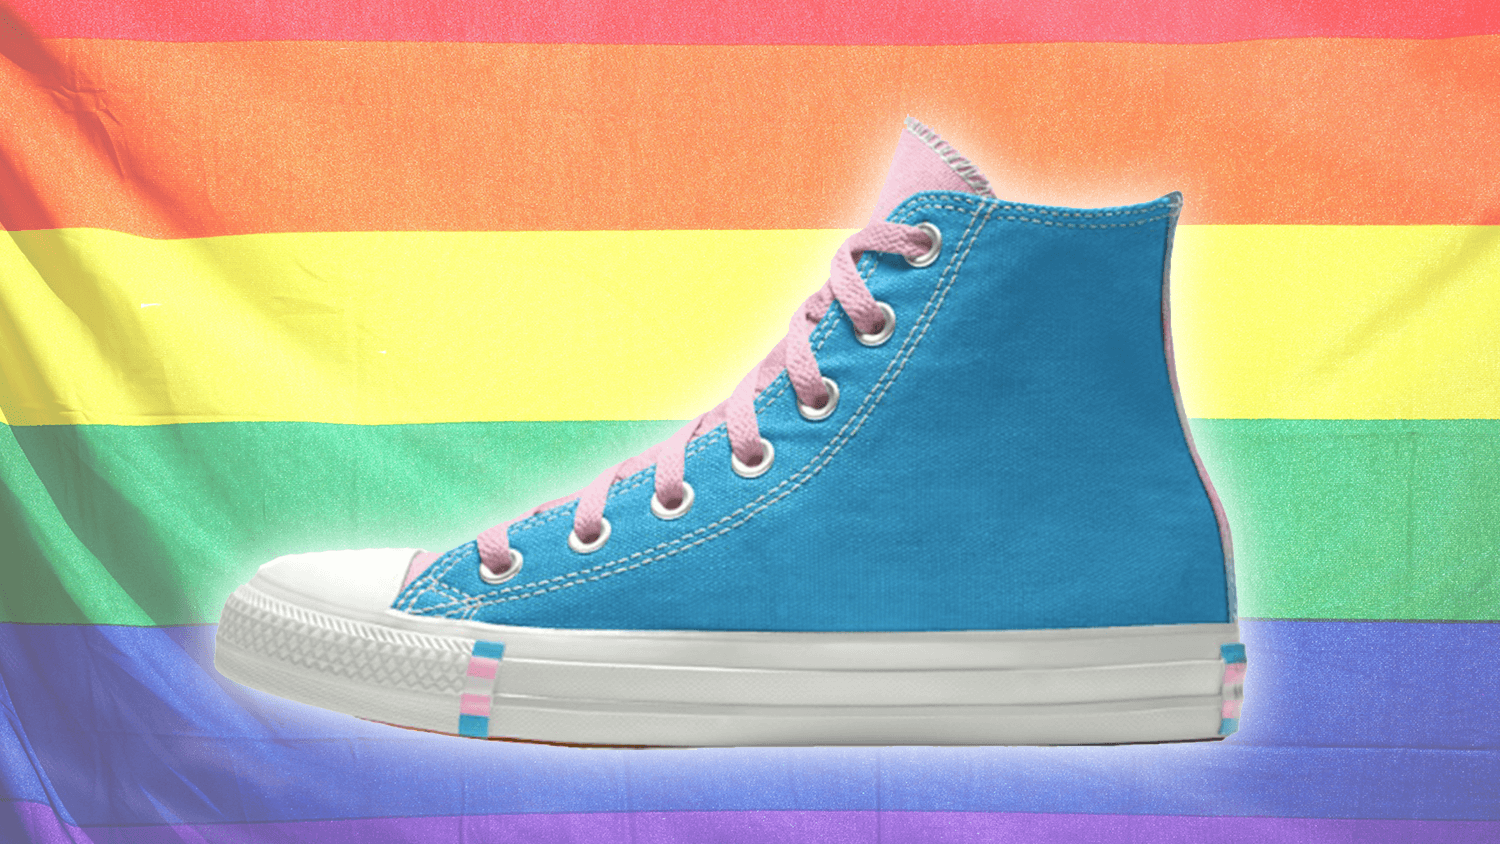 transgender converse shoes